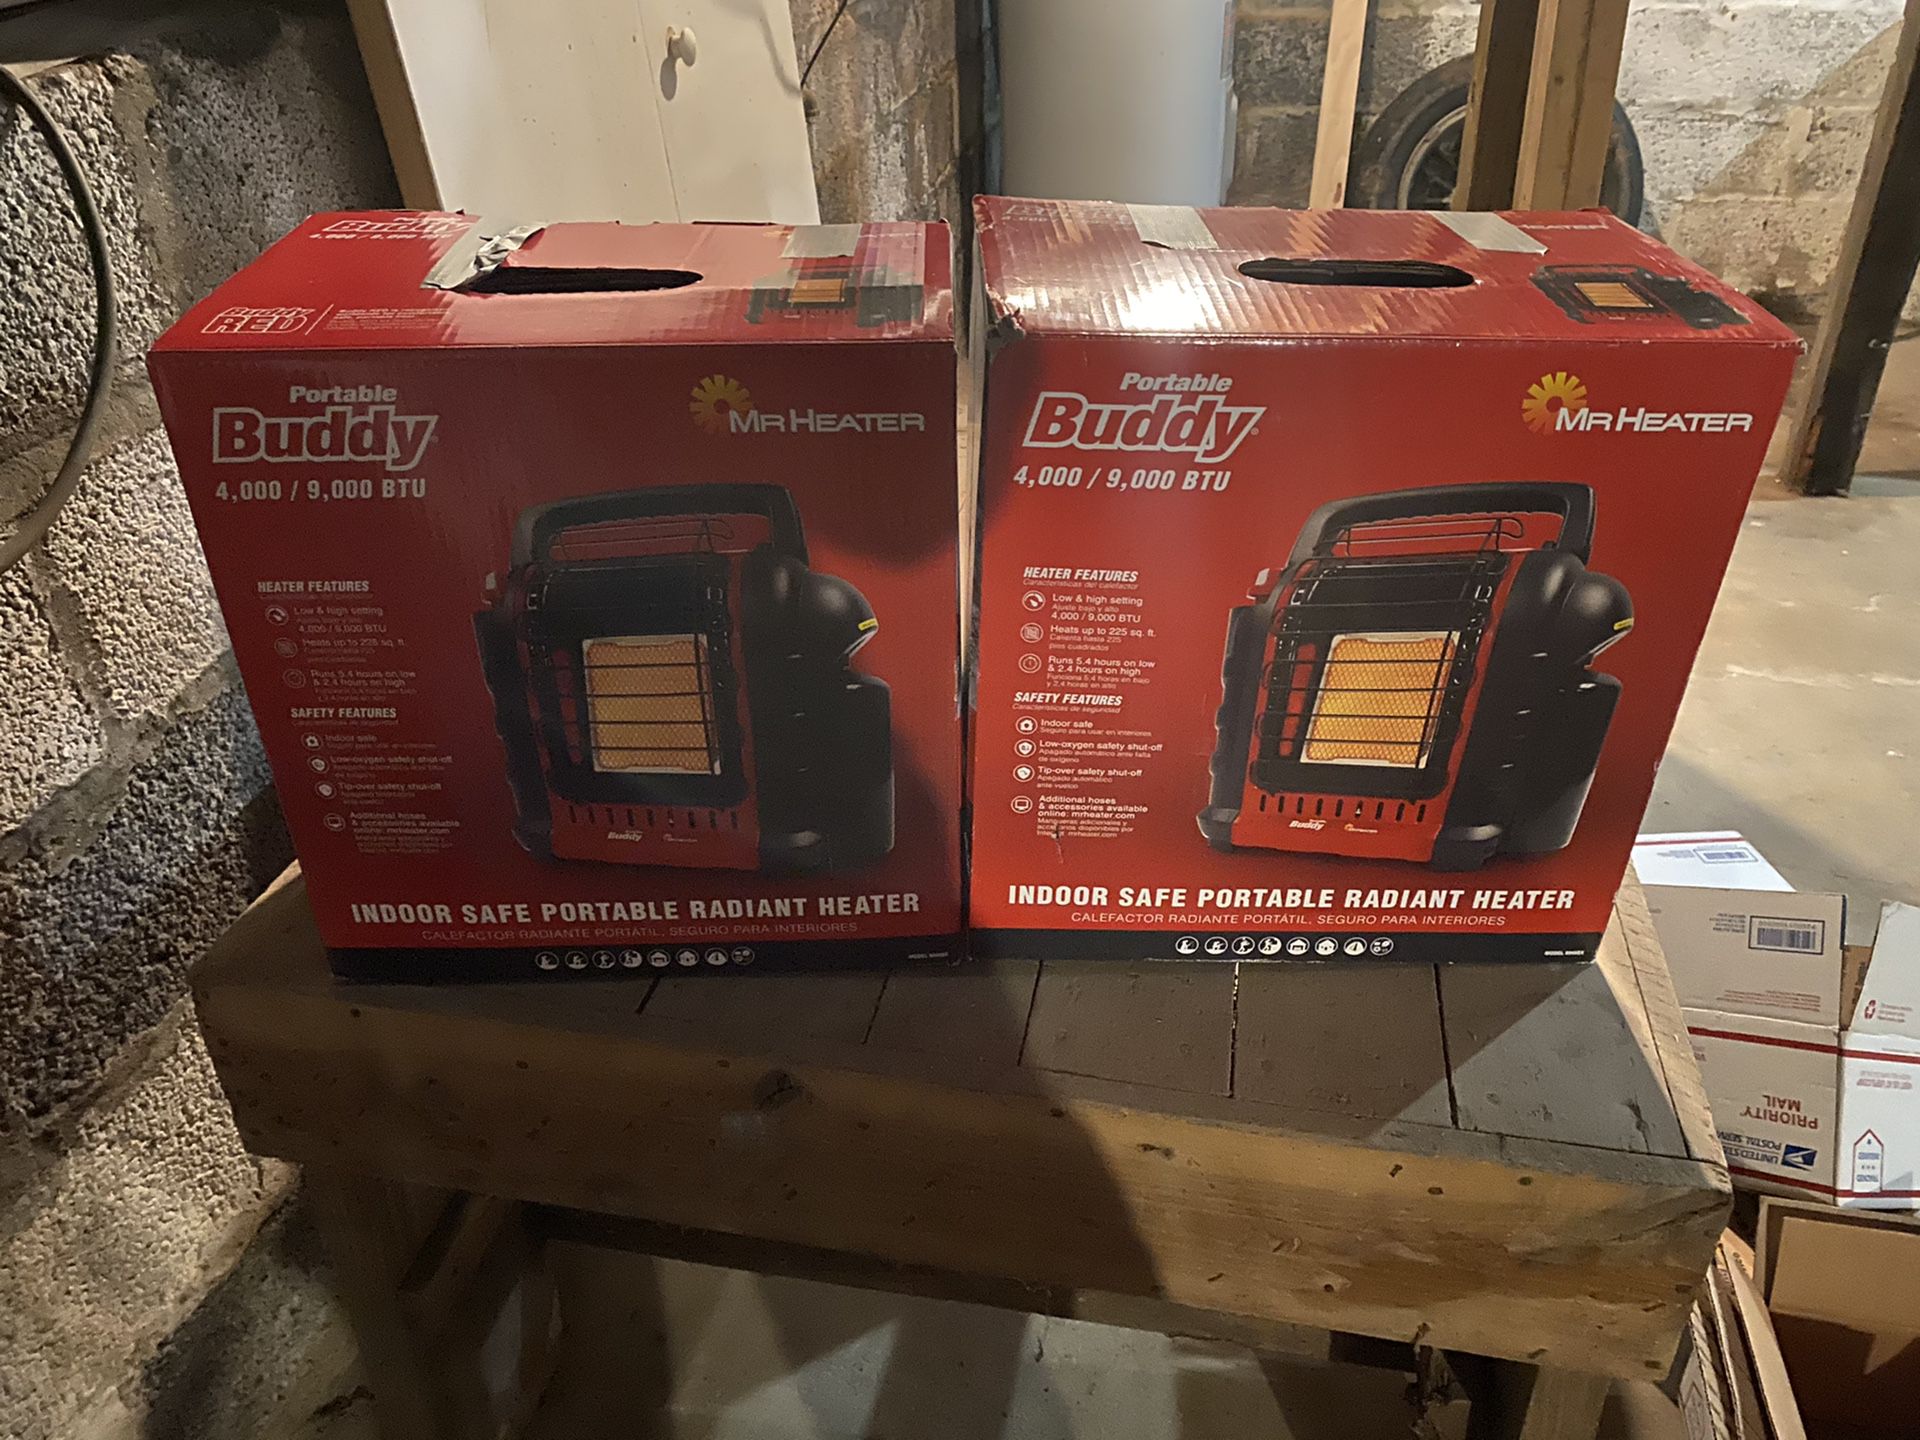 2 portable Buddy heaters